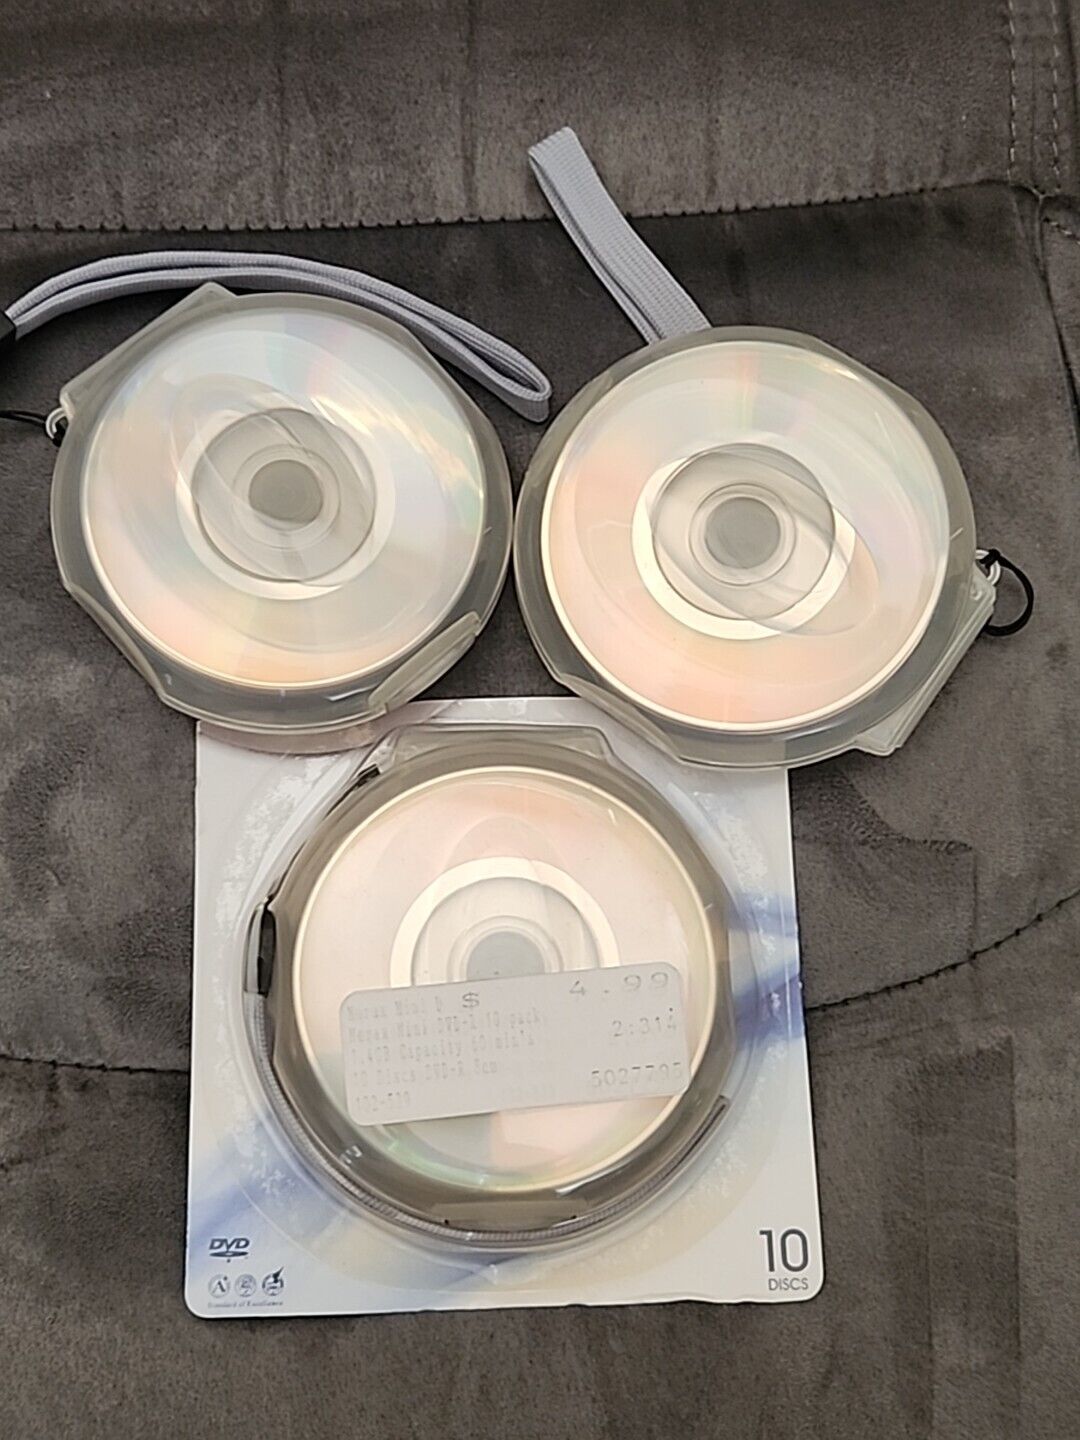 Merax Vintage Mini DVD-R 3 Packs with Case